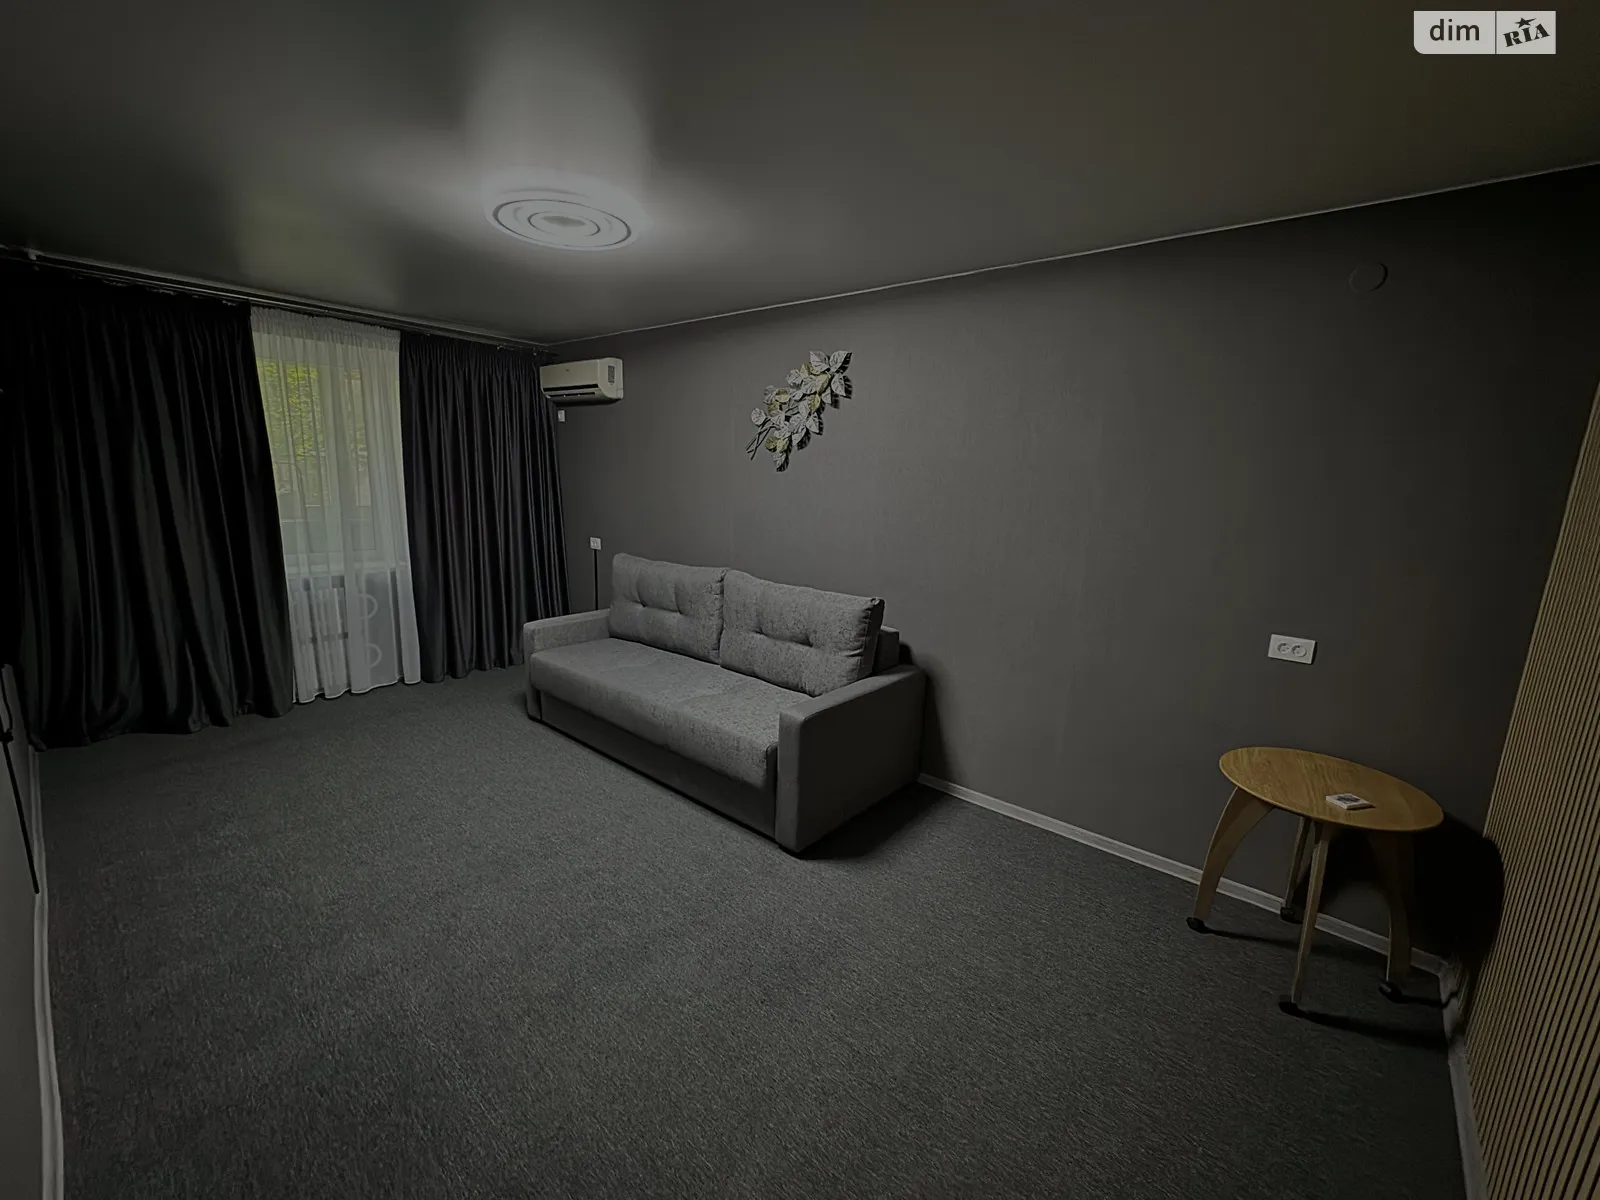 2-кімнатна квартира у Запоріжжі, цена: 1000 грн